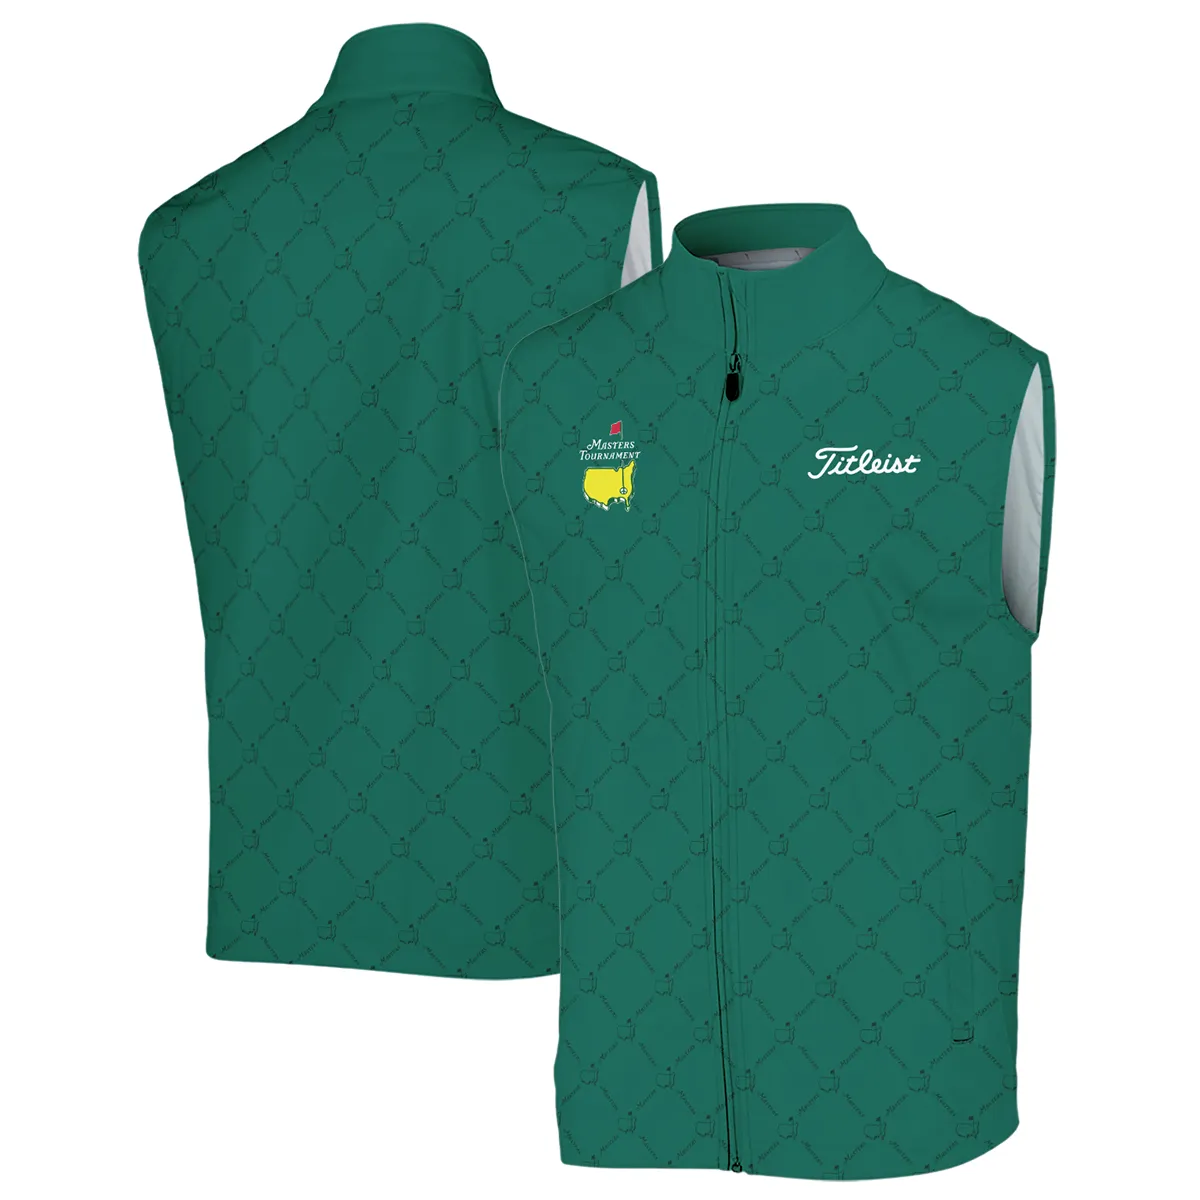 Golf Sport Pattern Color Green Mix Black Masters Tournament Titleist Zipper Polo Shirt Style Classic